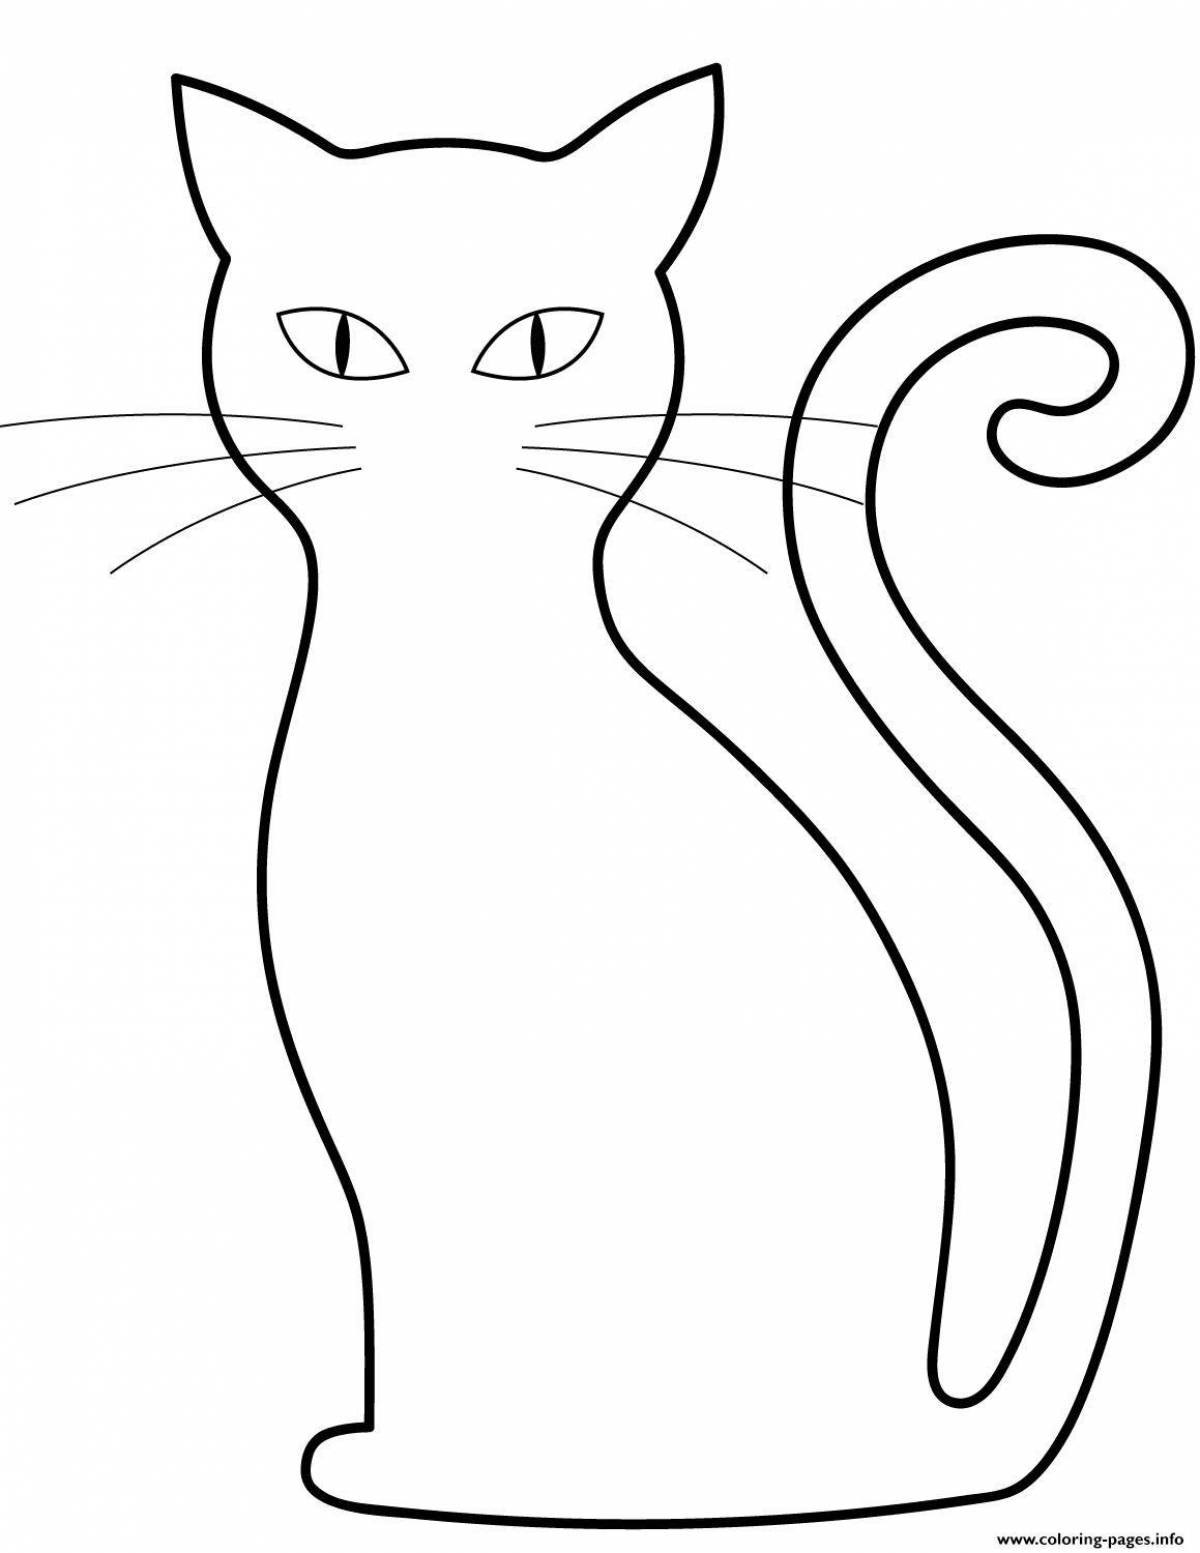 Живая страница раскраски контура кошки